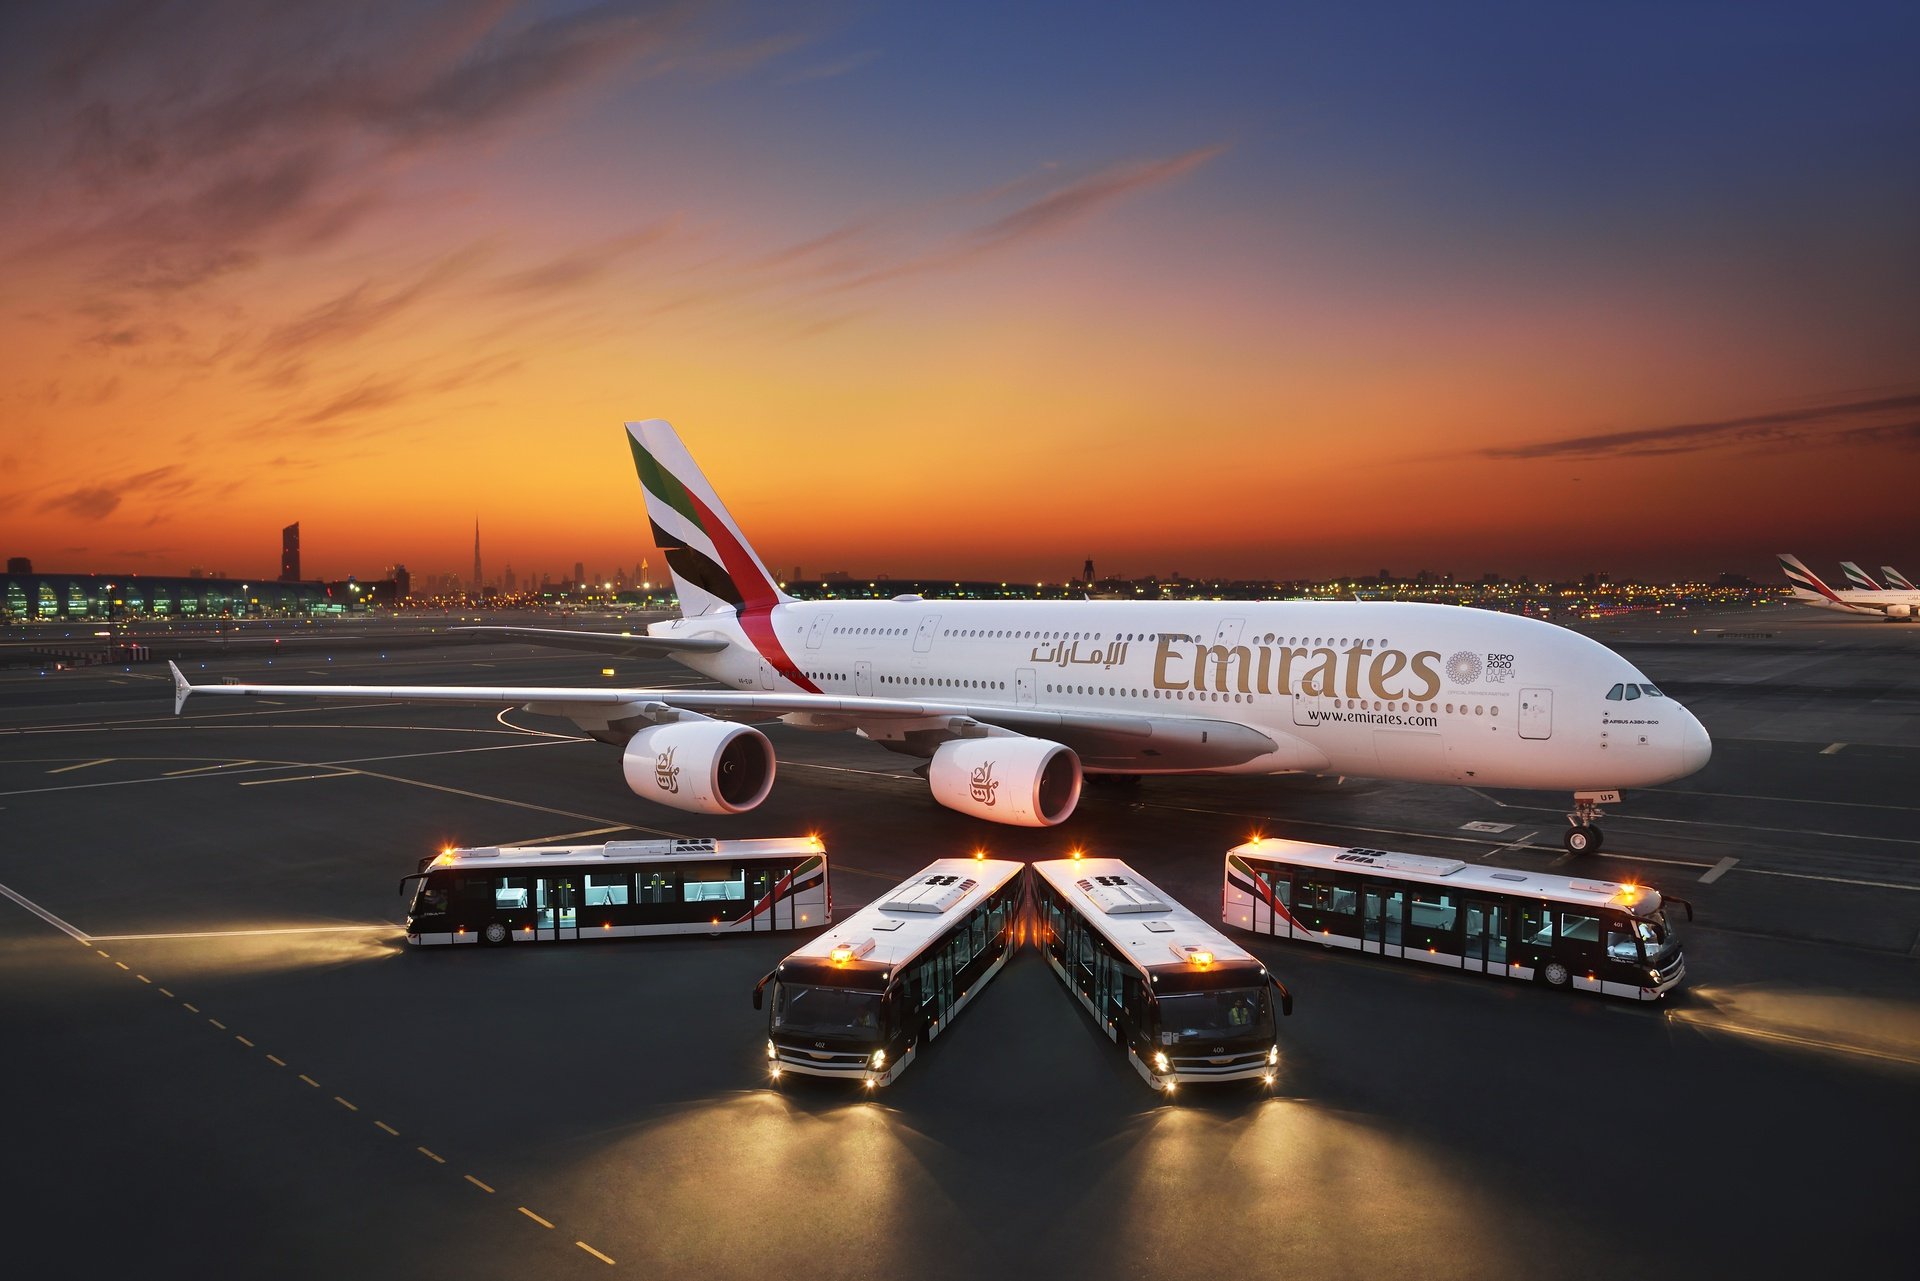 Сайт эмирейтс. Авиакомпания Дубай Эмирейтс. Самолет Дубай Эмирейтс. Авиалинии Дубай Эмирейтс самолеты. Дубайская авиакомпания Emirates Airlines.